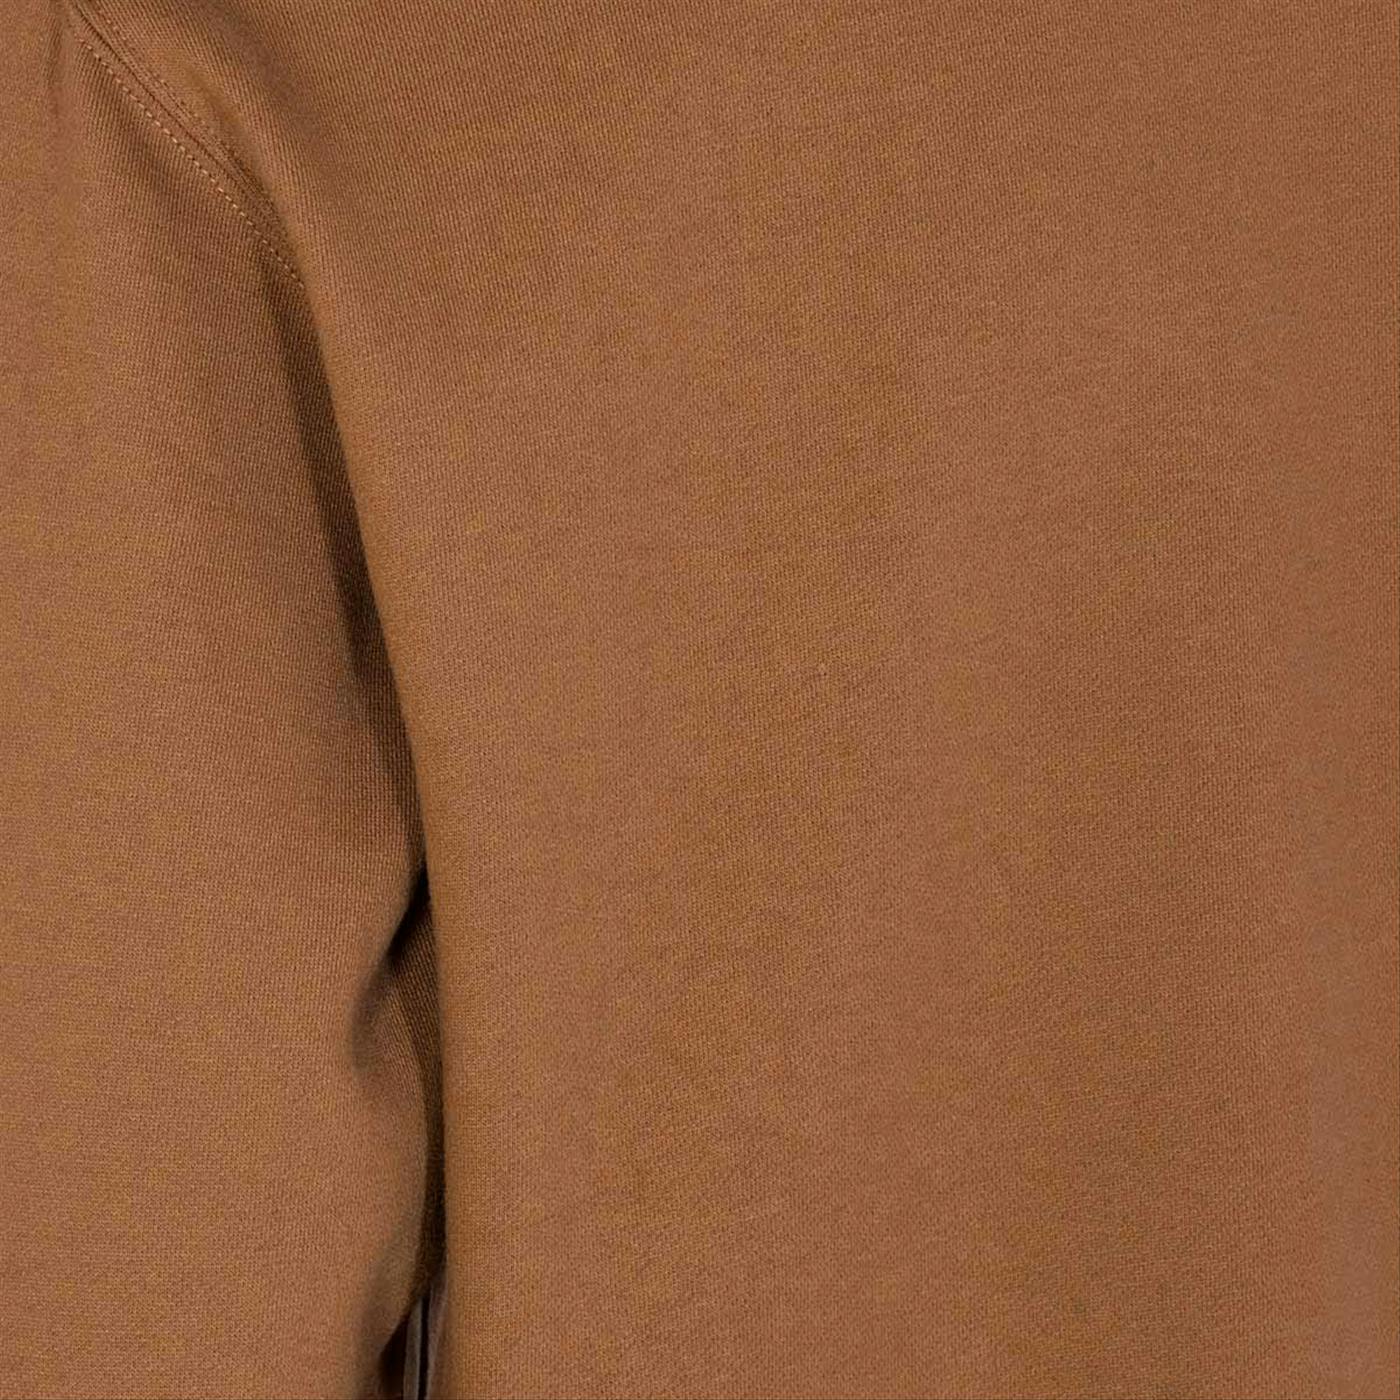 Minimum - Cognac Kjartan sweater